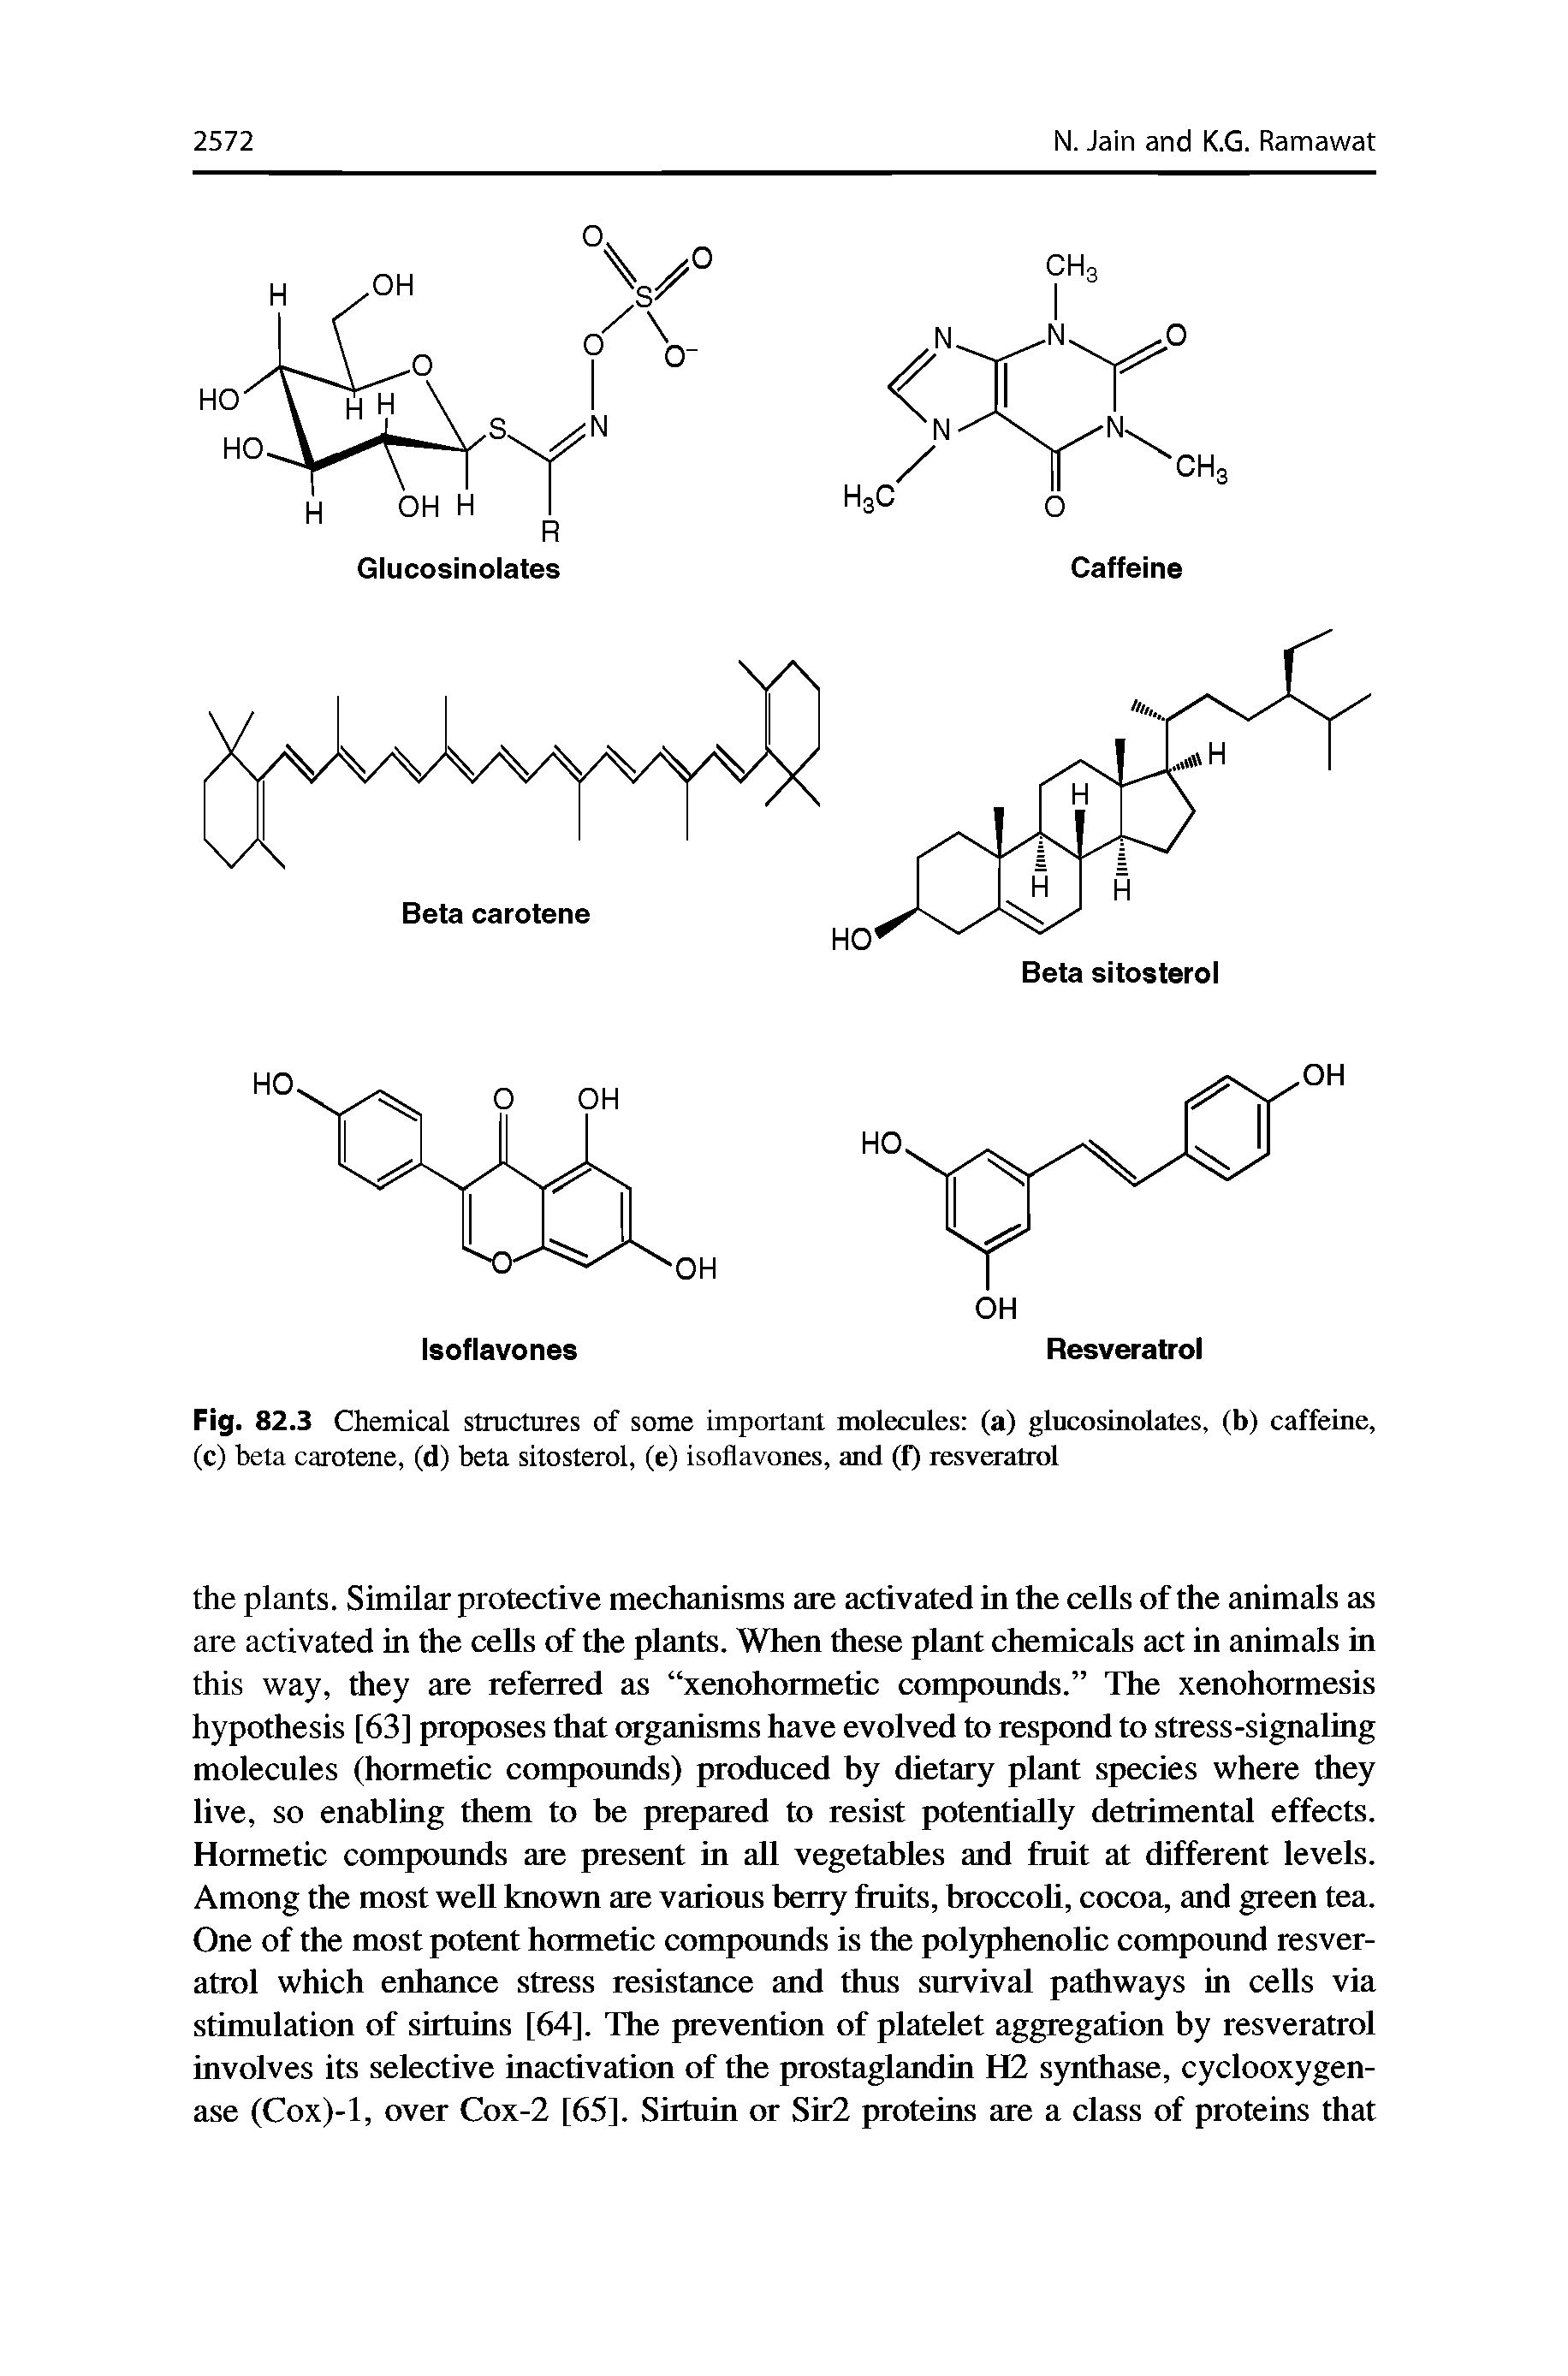 Fig. 82.3 Chemical structures of some important molecules (a) glucosinolates, (b) caffeine, (c) beta carotene, (d) beta sitosterol, (e) isoflavones, and (f) resveratrol...